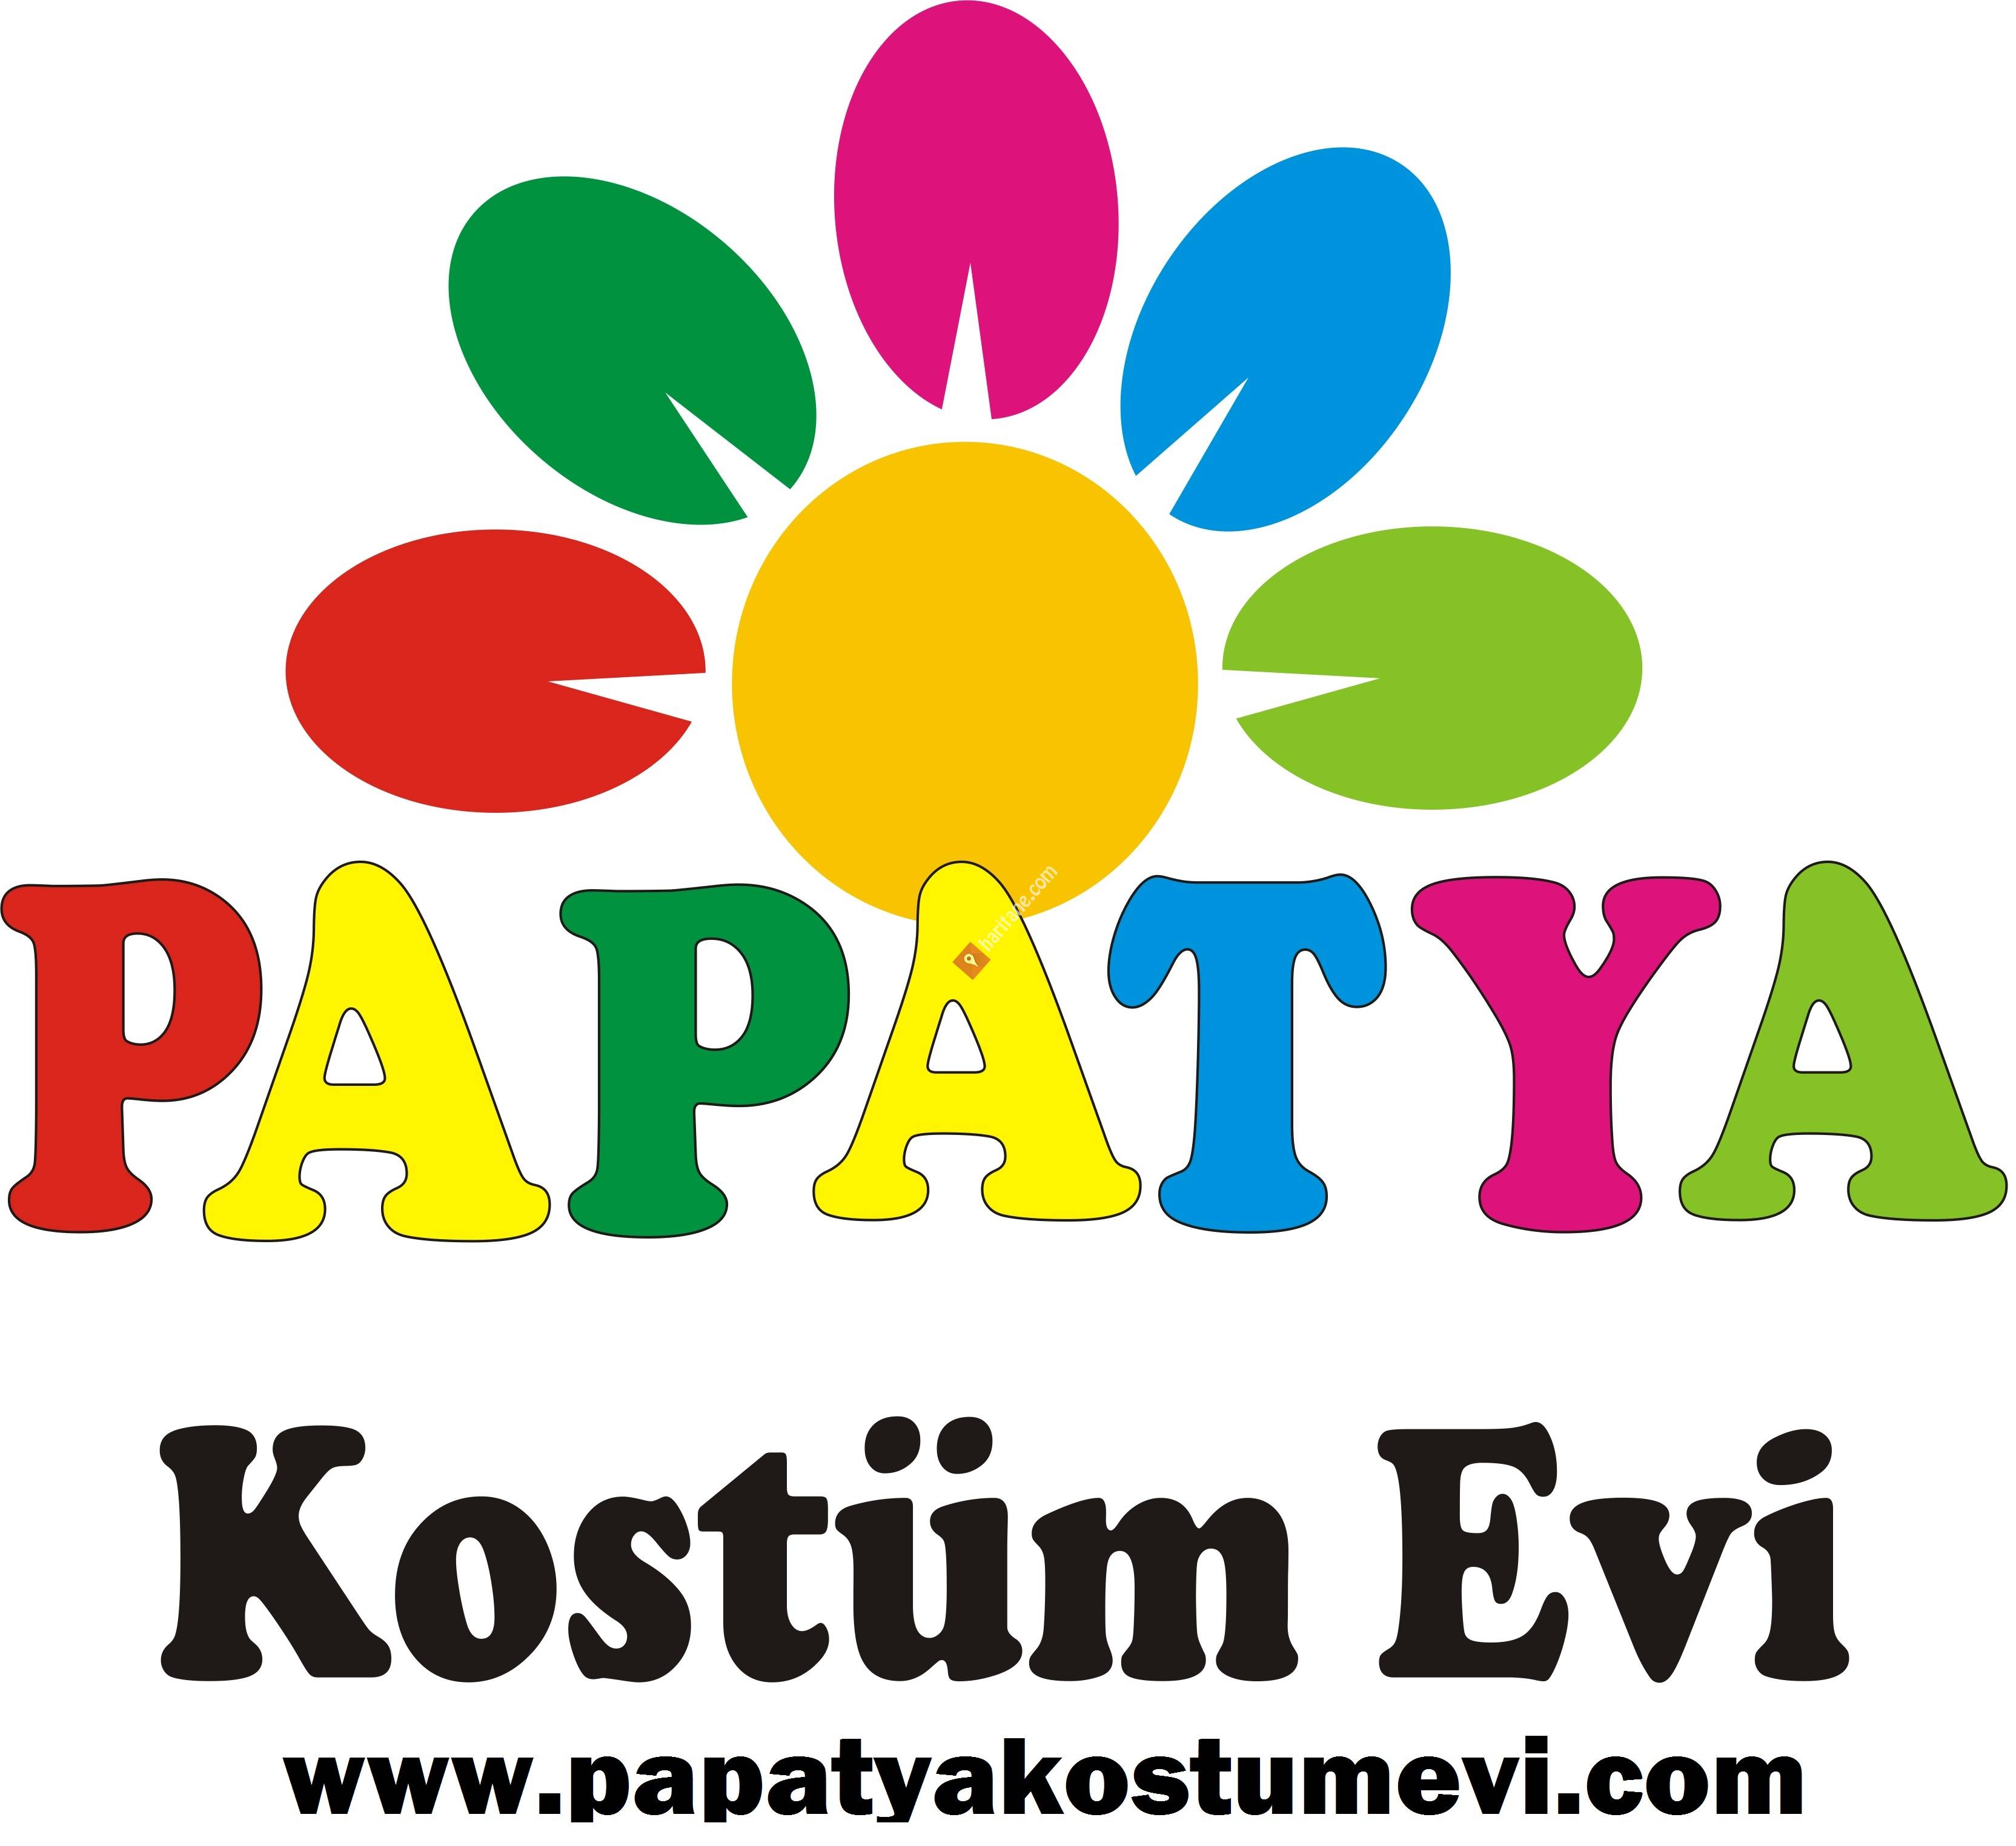 Papatya Kostüm Evi /BATMAN